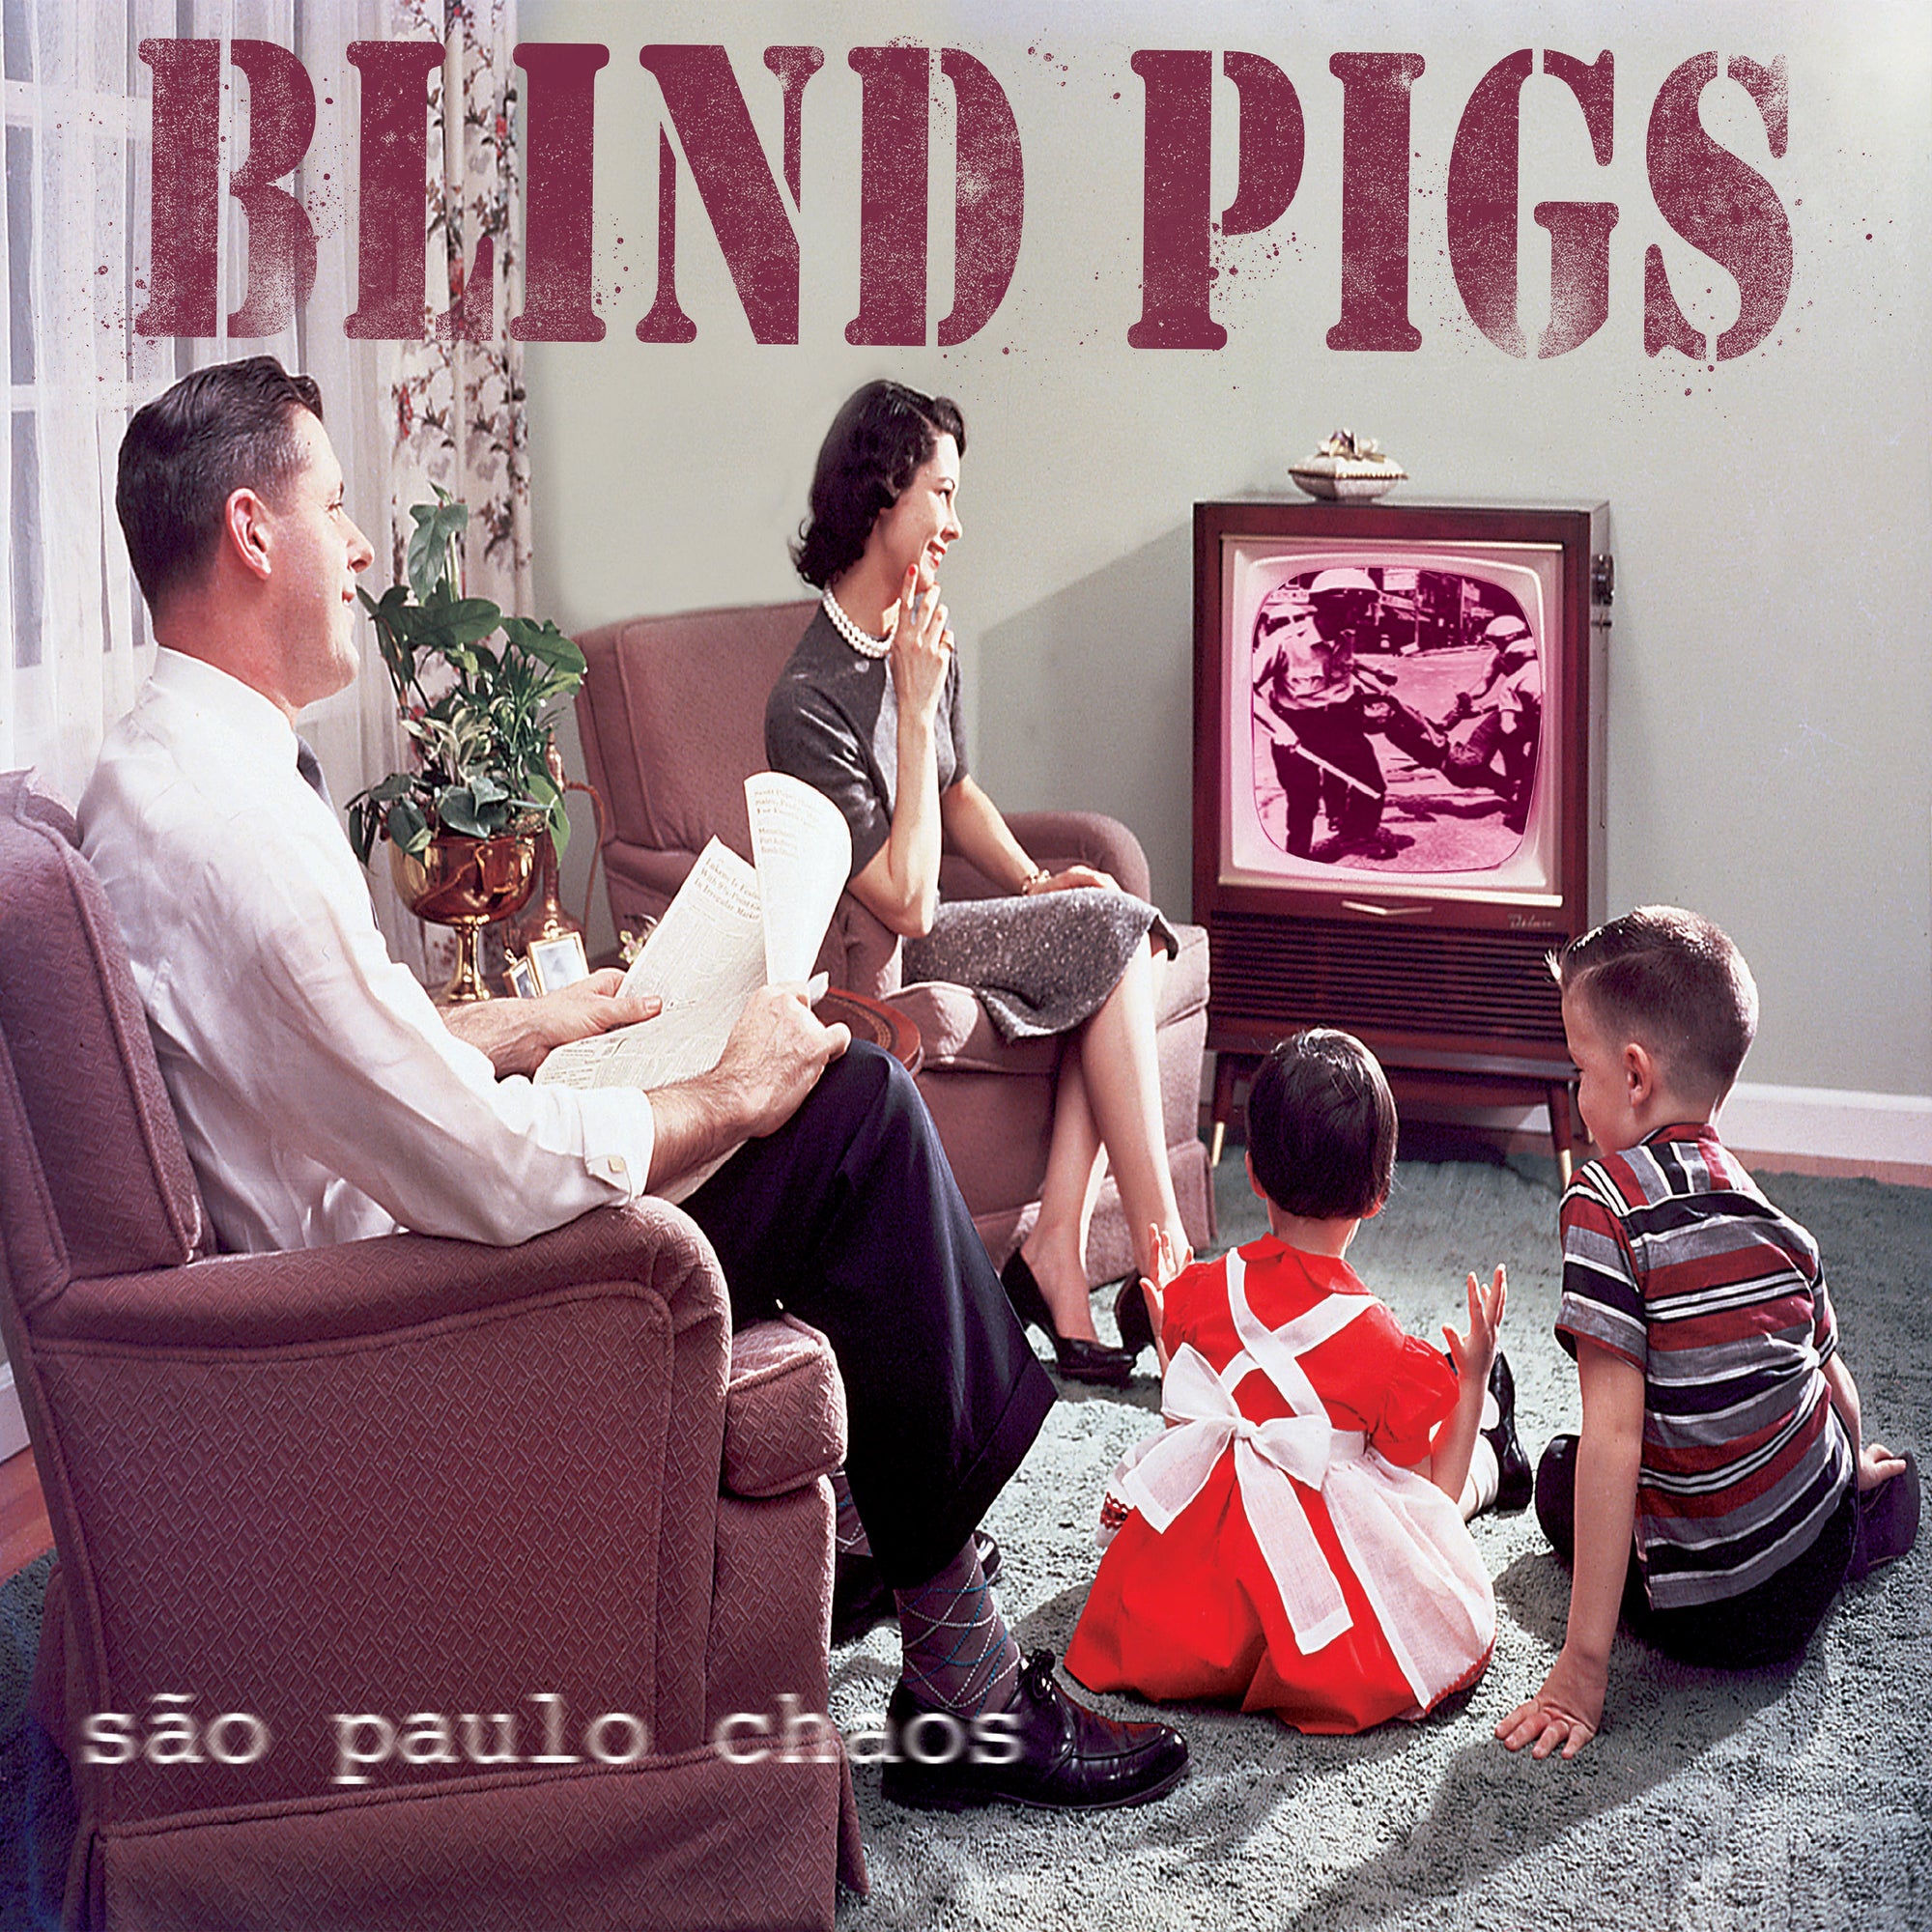 Blind Pigs - São Paulo Chaos Oxblood & Clear W/ Black & White Splatter Vinyl LP